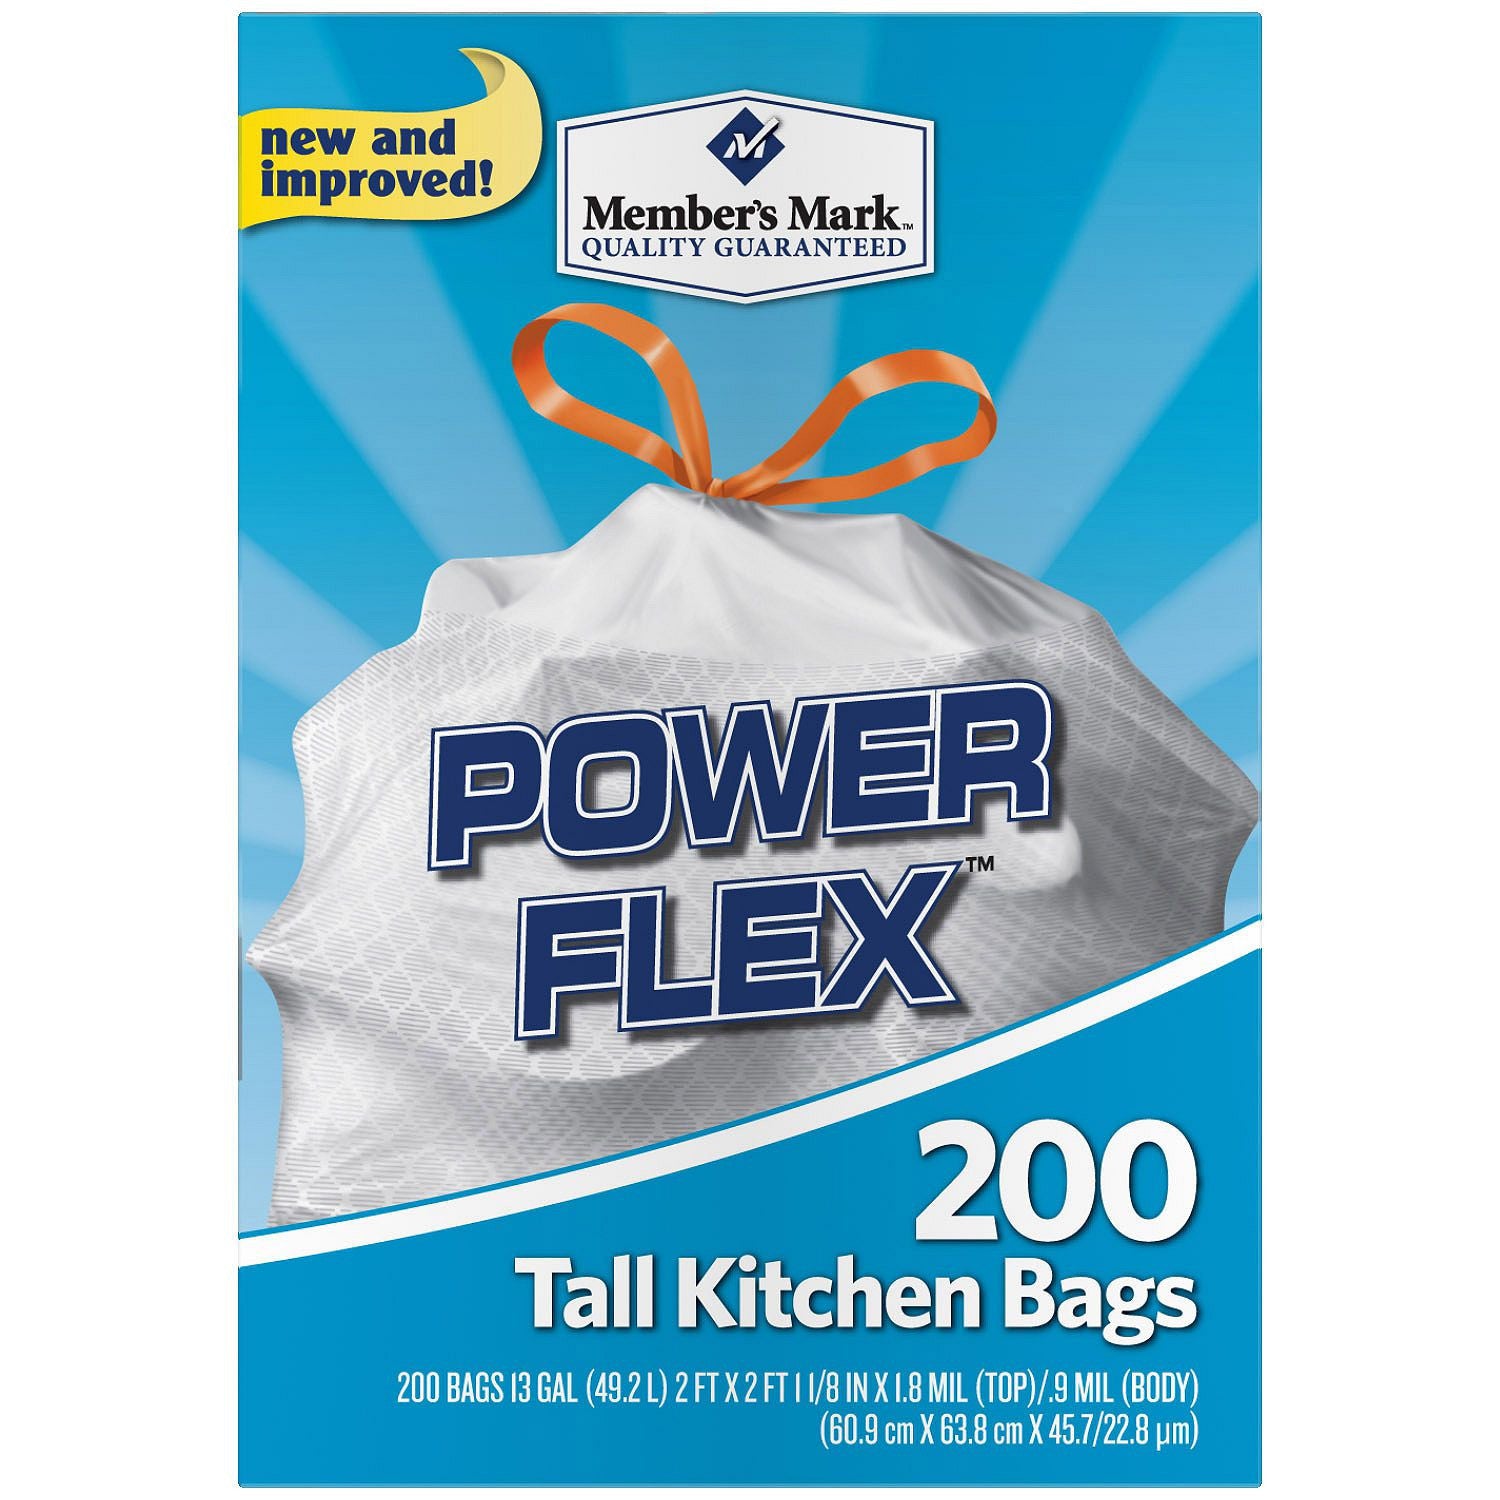  Member's Mark Power Flex Tall Kitchen Drawstring Bags, 200  Count : Health & Household